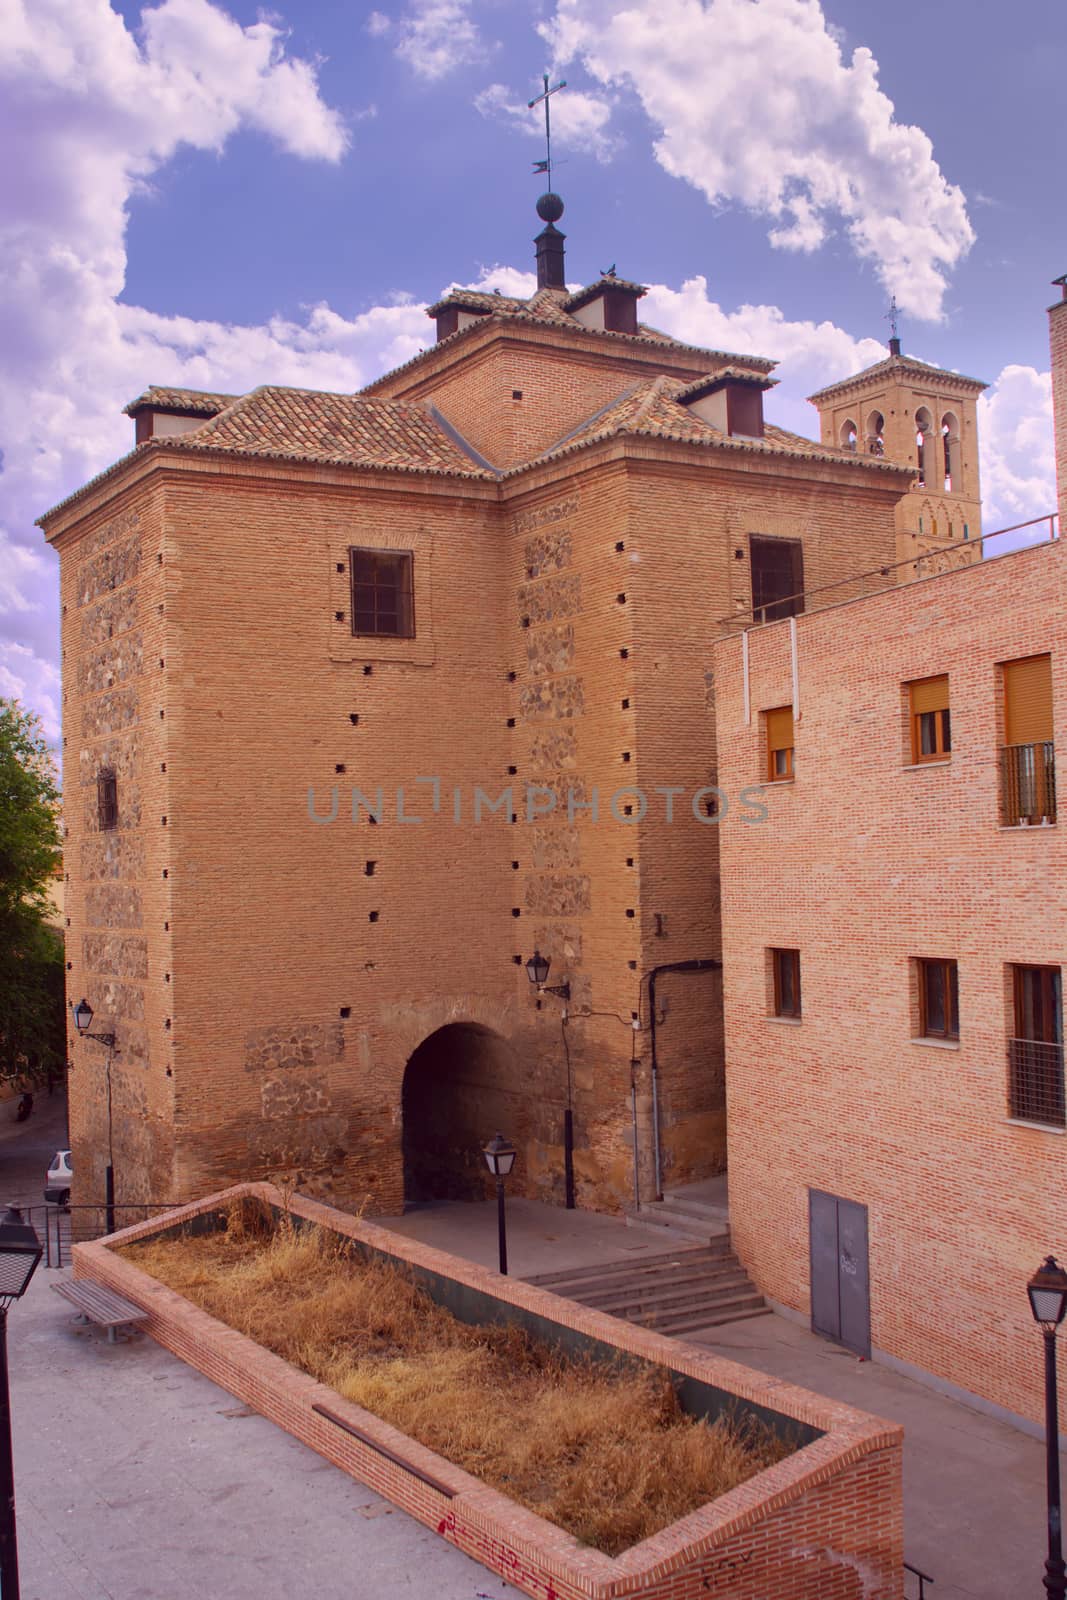 Old prison in the city of Toledo